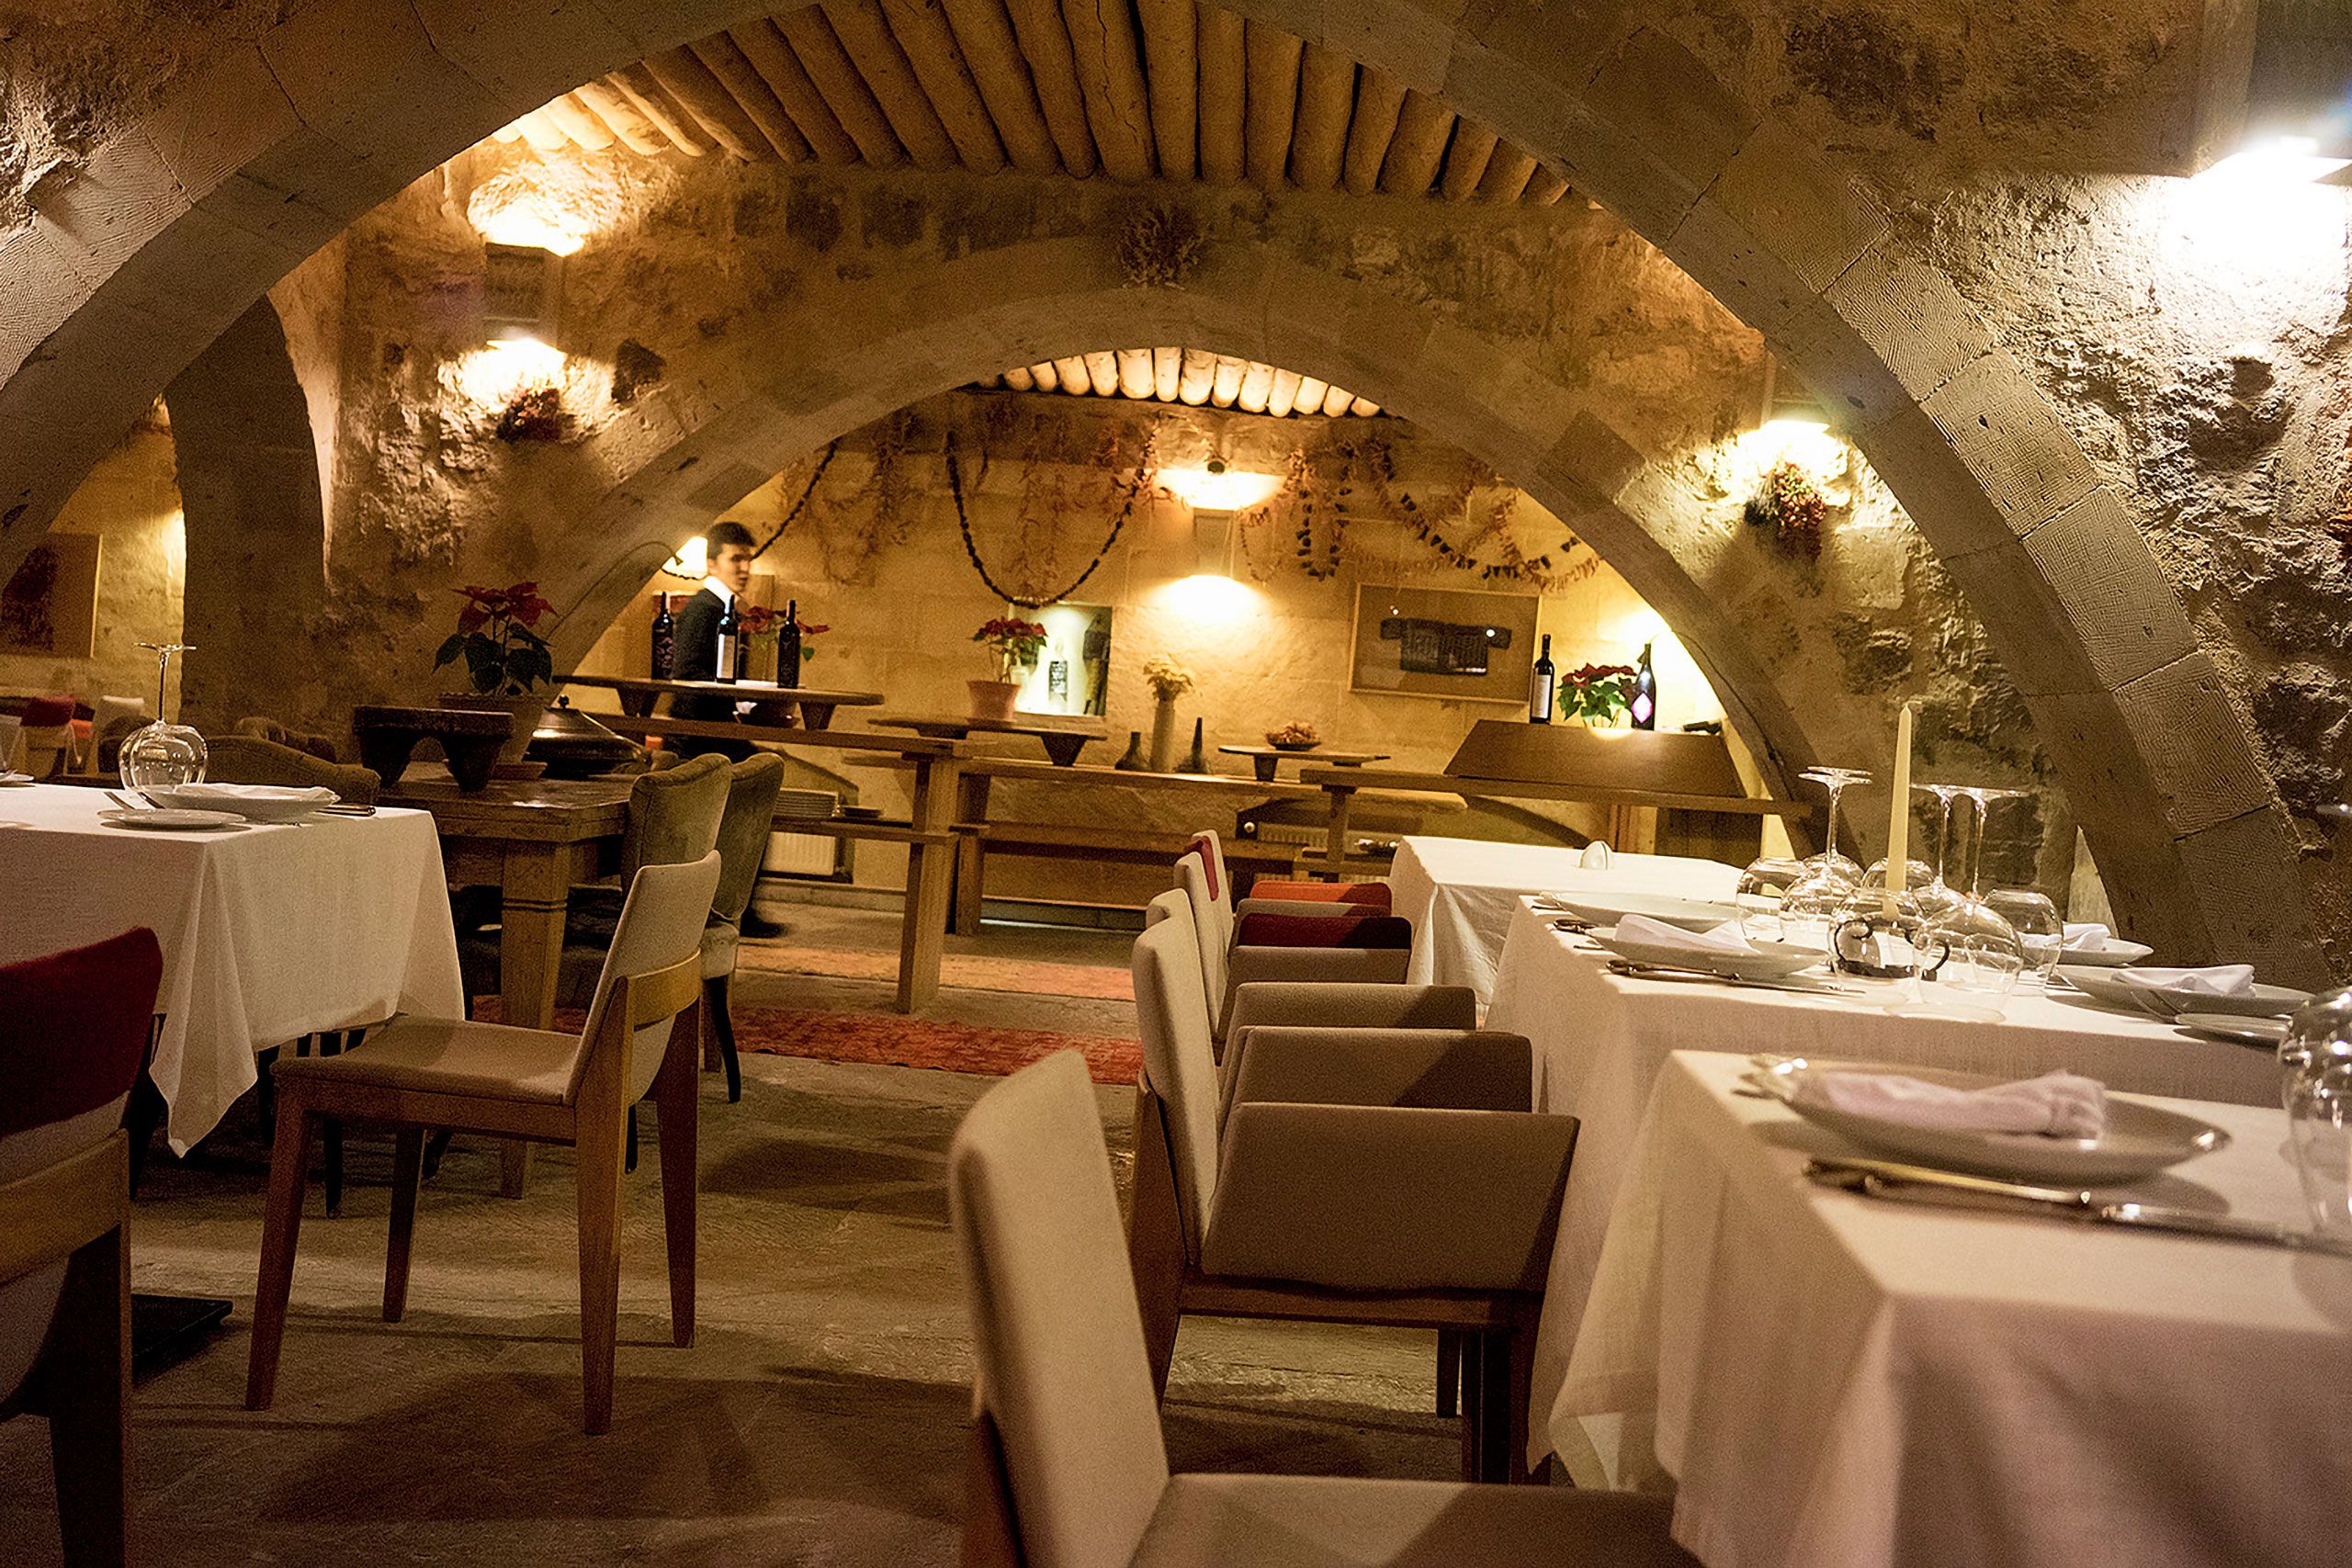 Resturant Mithra Cave Hotel, Cappadociain Turkey 